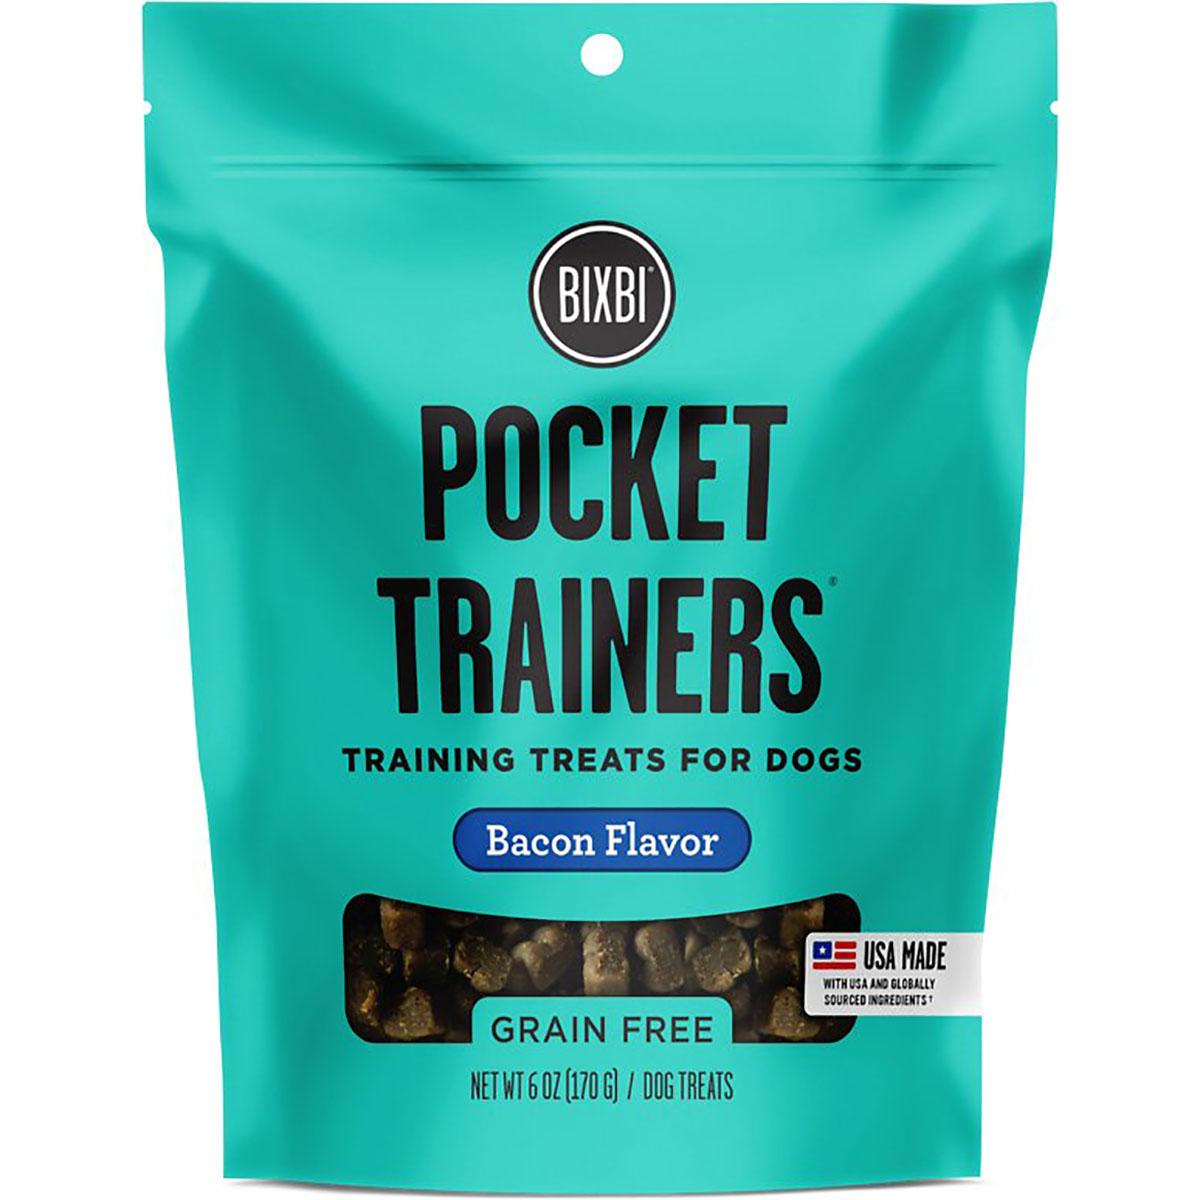 BIXBI Pocket Trainers Bacon Flavor Dog Treats